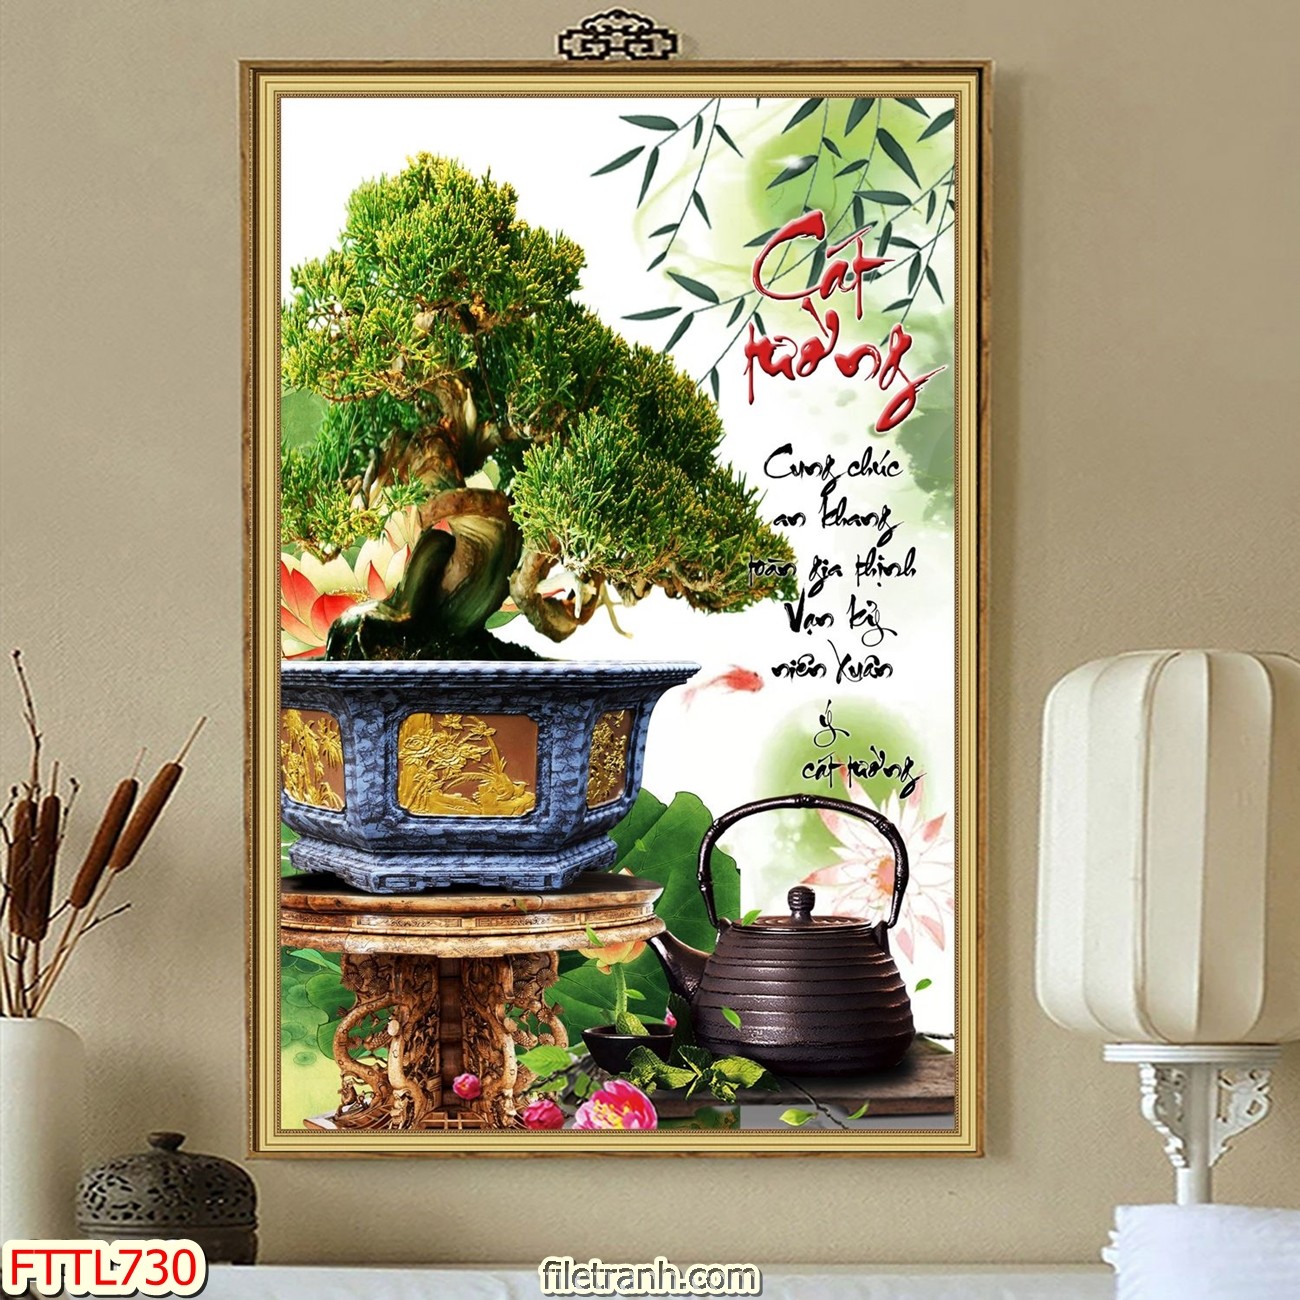 https://filetranh.com/file-tranh-chau-mai-bonsai/file-tranh-chau-mai-bonsai-fttl730.html